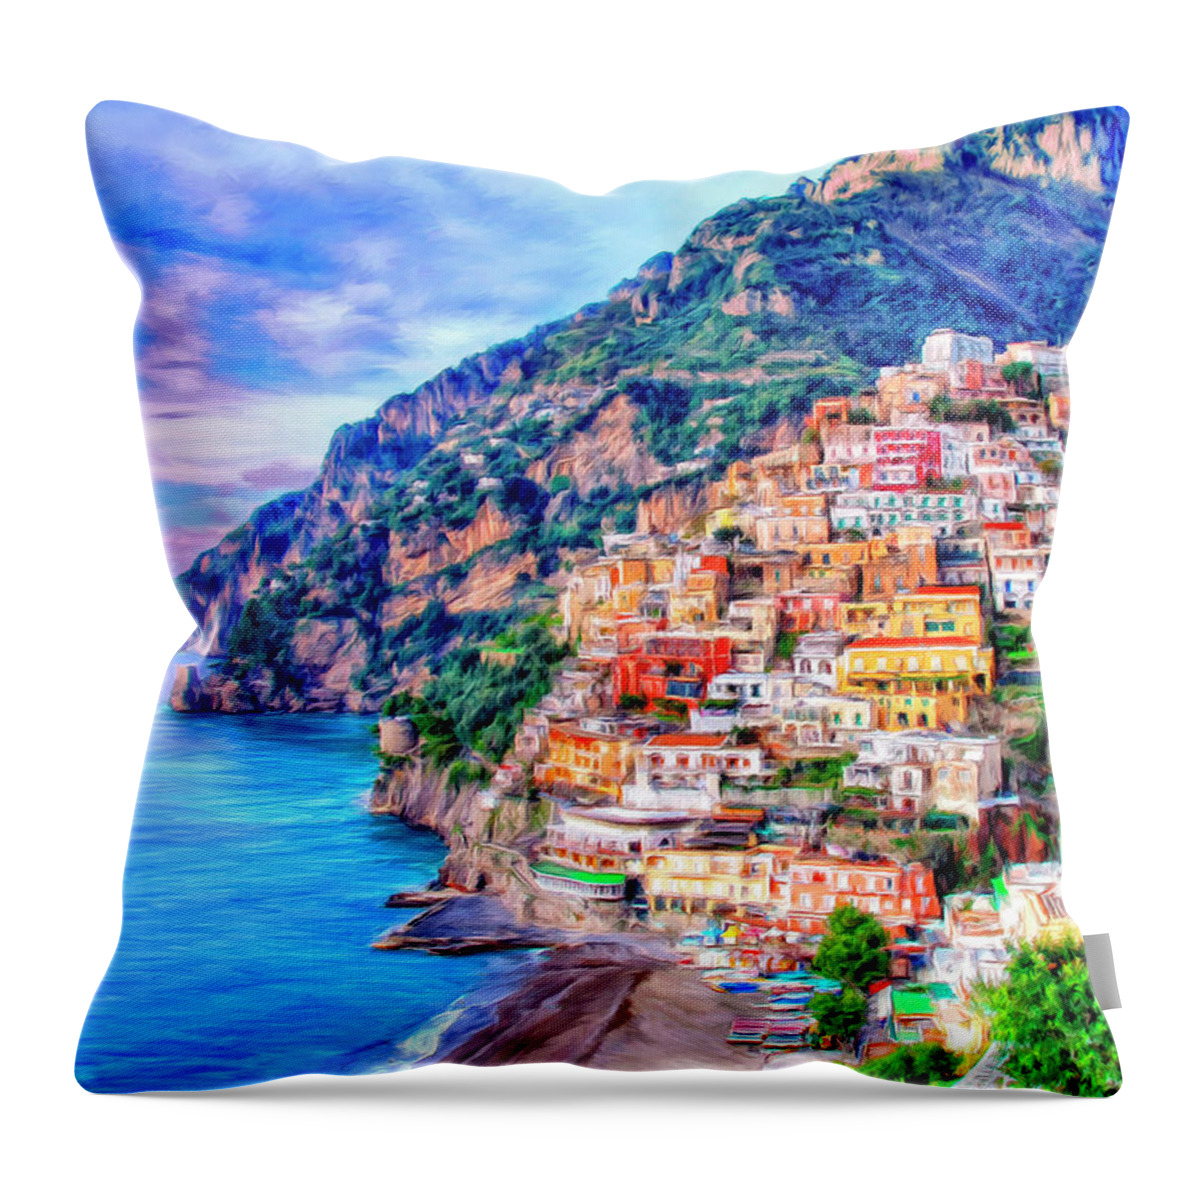 Amalfi Coast Throw Pillow featuring the painting Amalfi Coast at Positano by Dominic Piperata